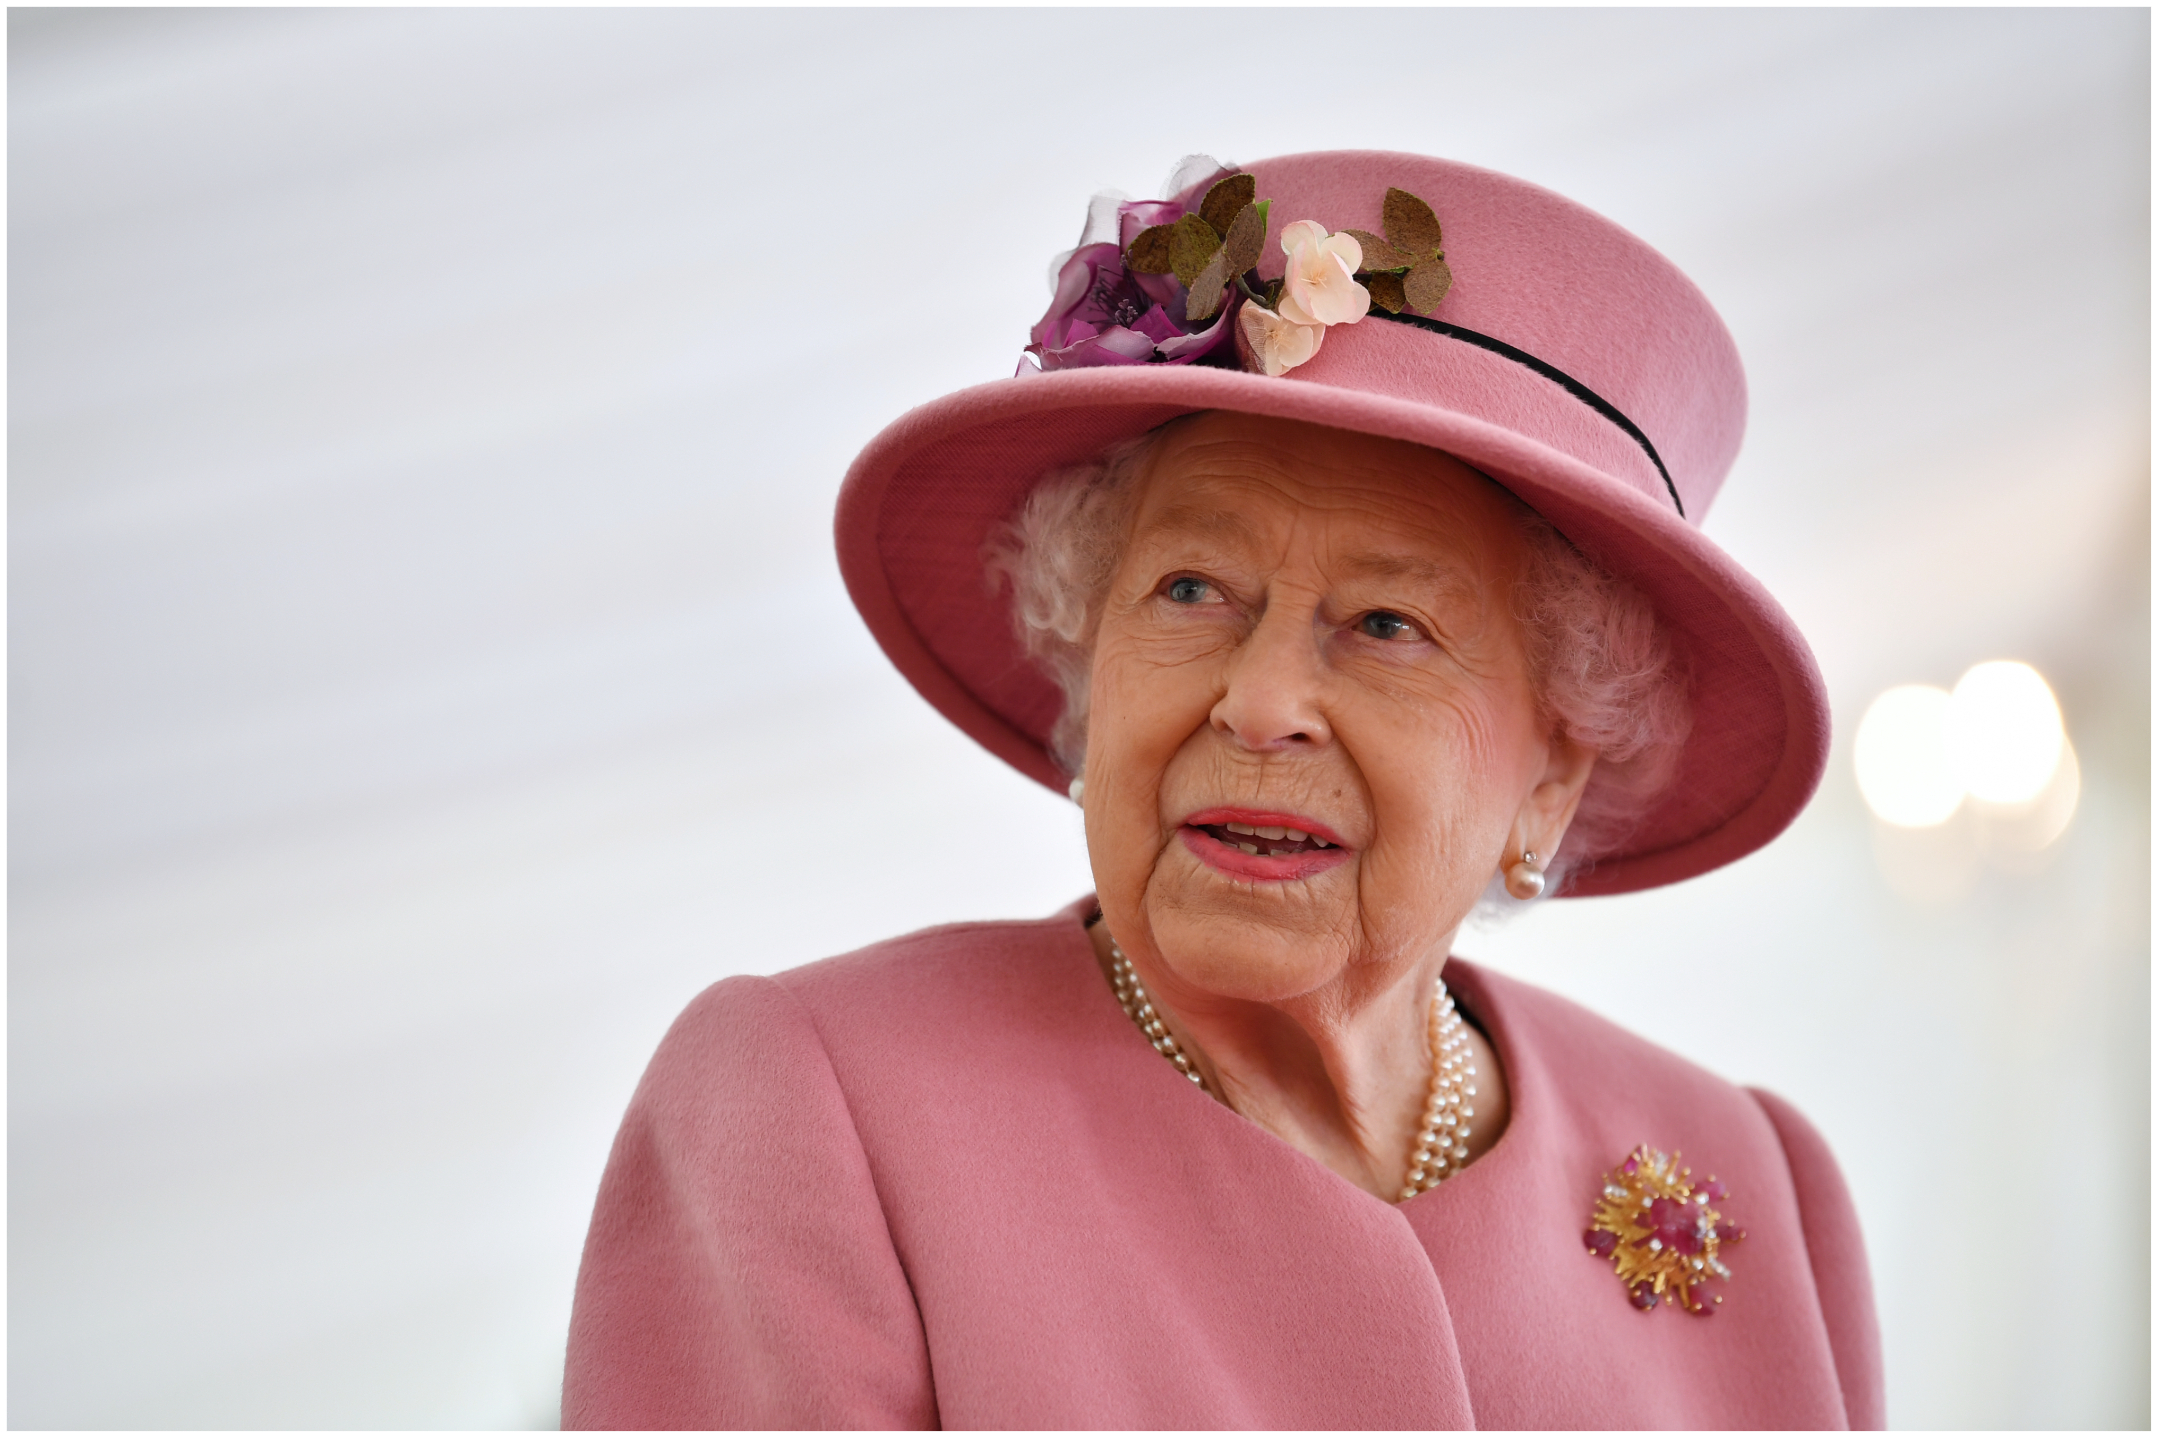 Queen Elizabeth II news & latest pictures from